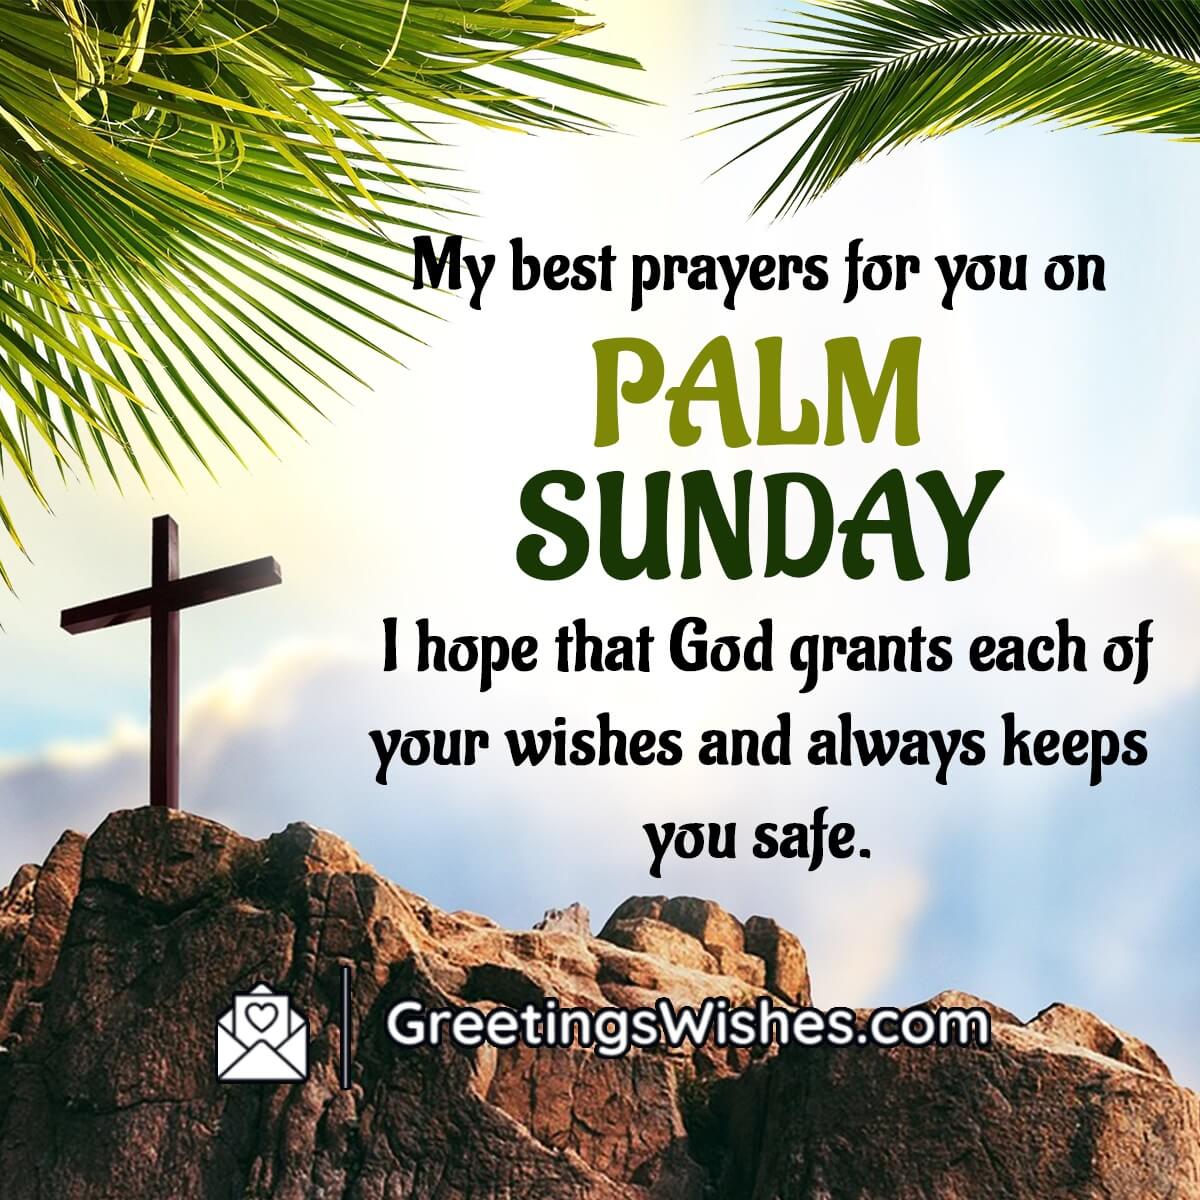 Palm Sunday Prayer Message